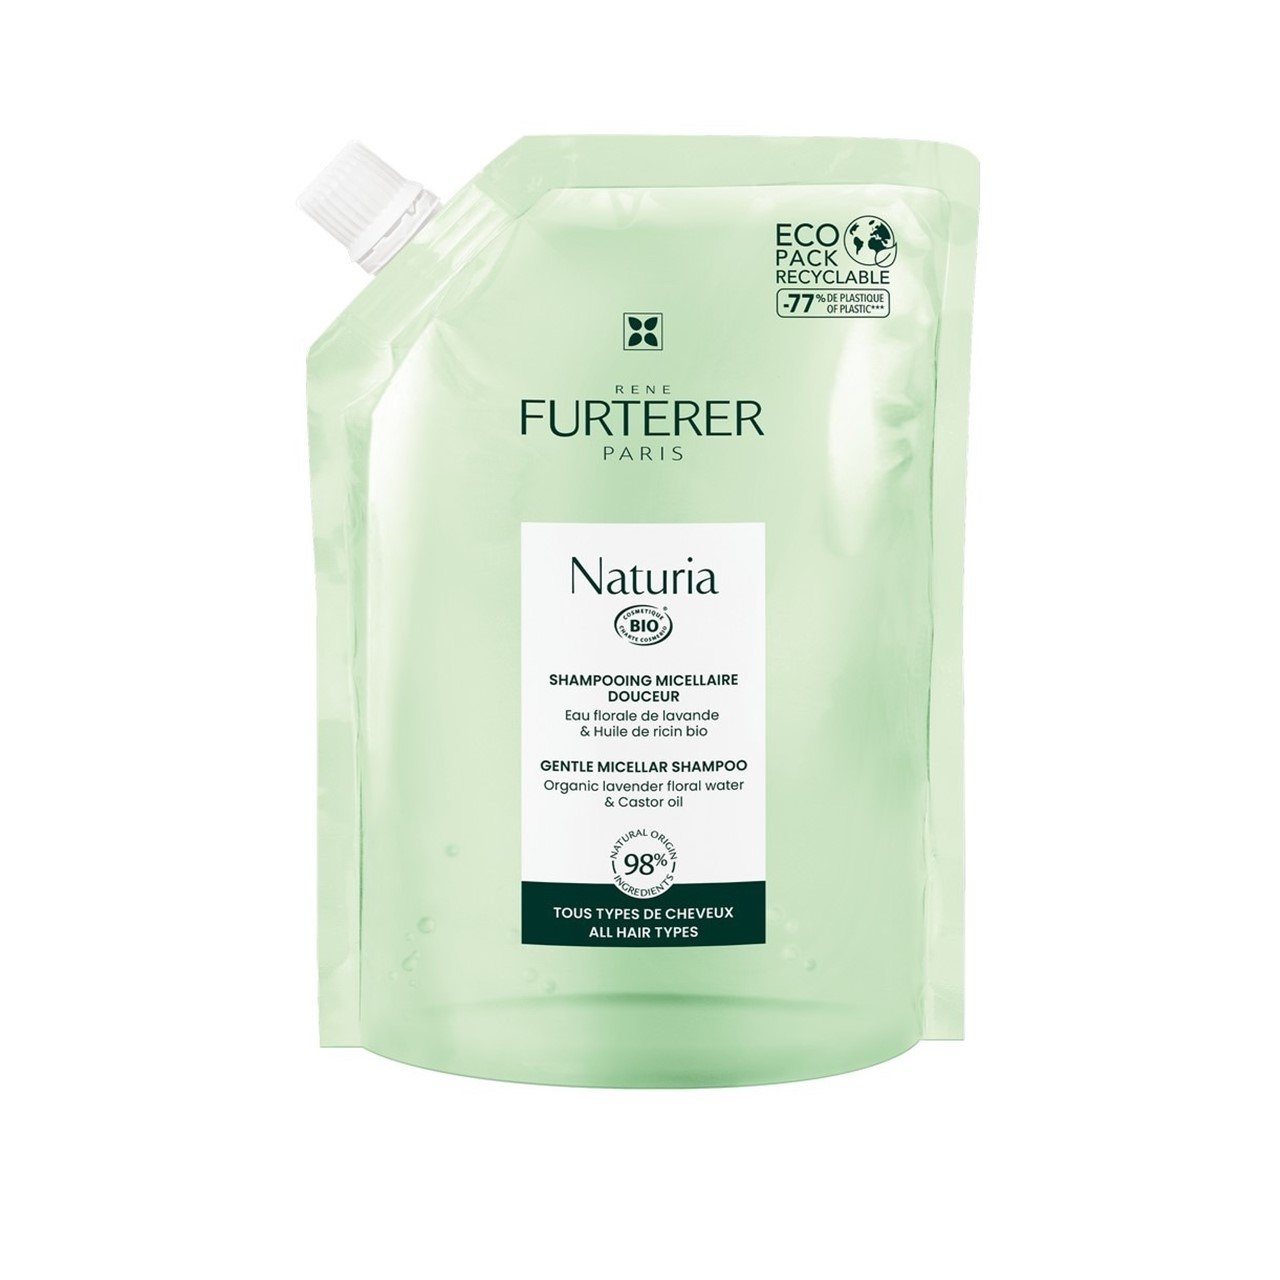 René Furterer Naturia Gentle Micellar Shampoo Refill 400ml